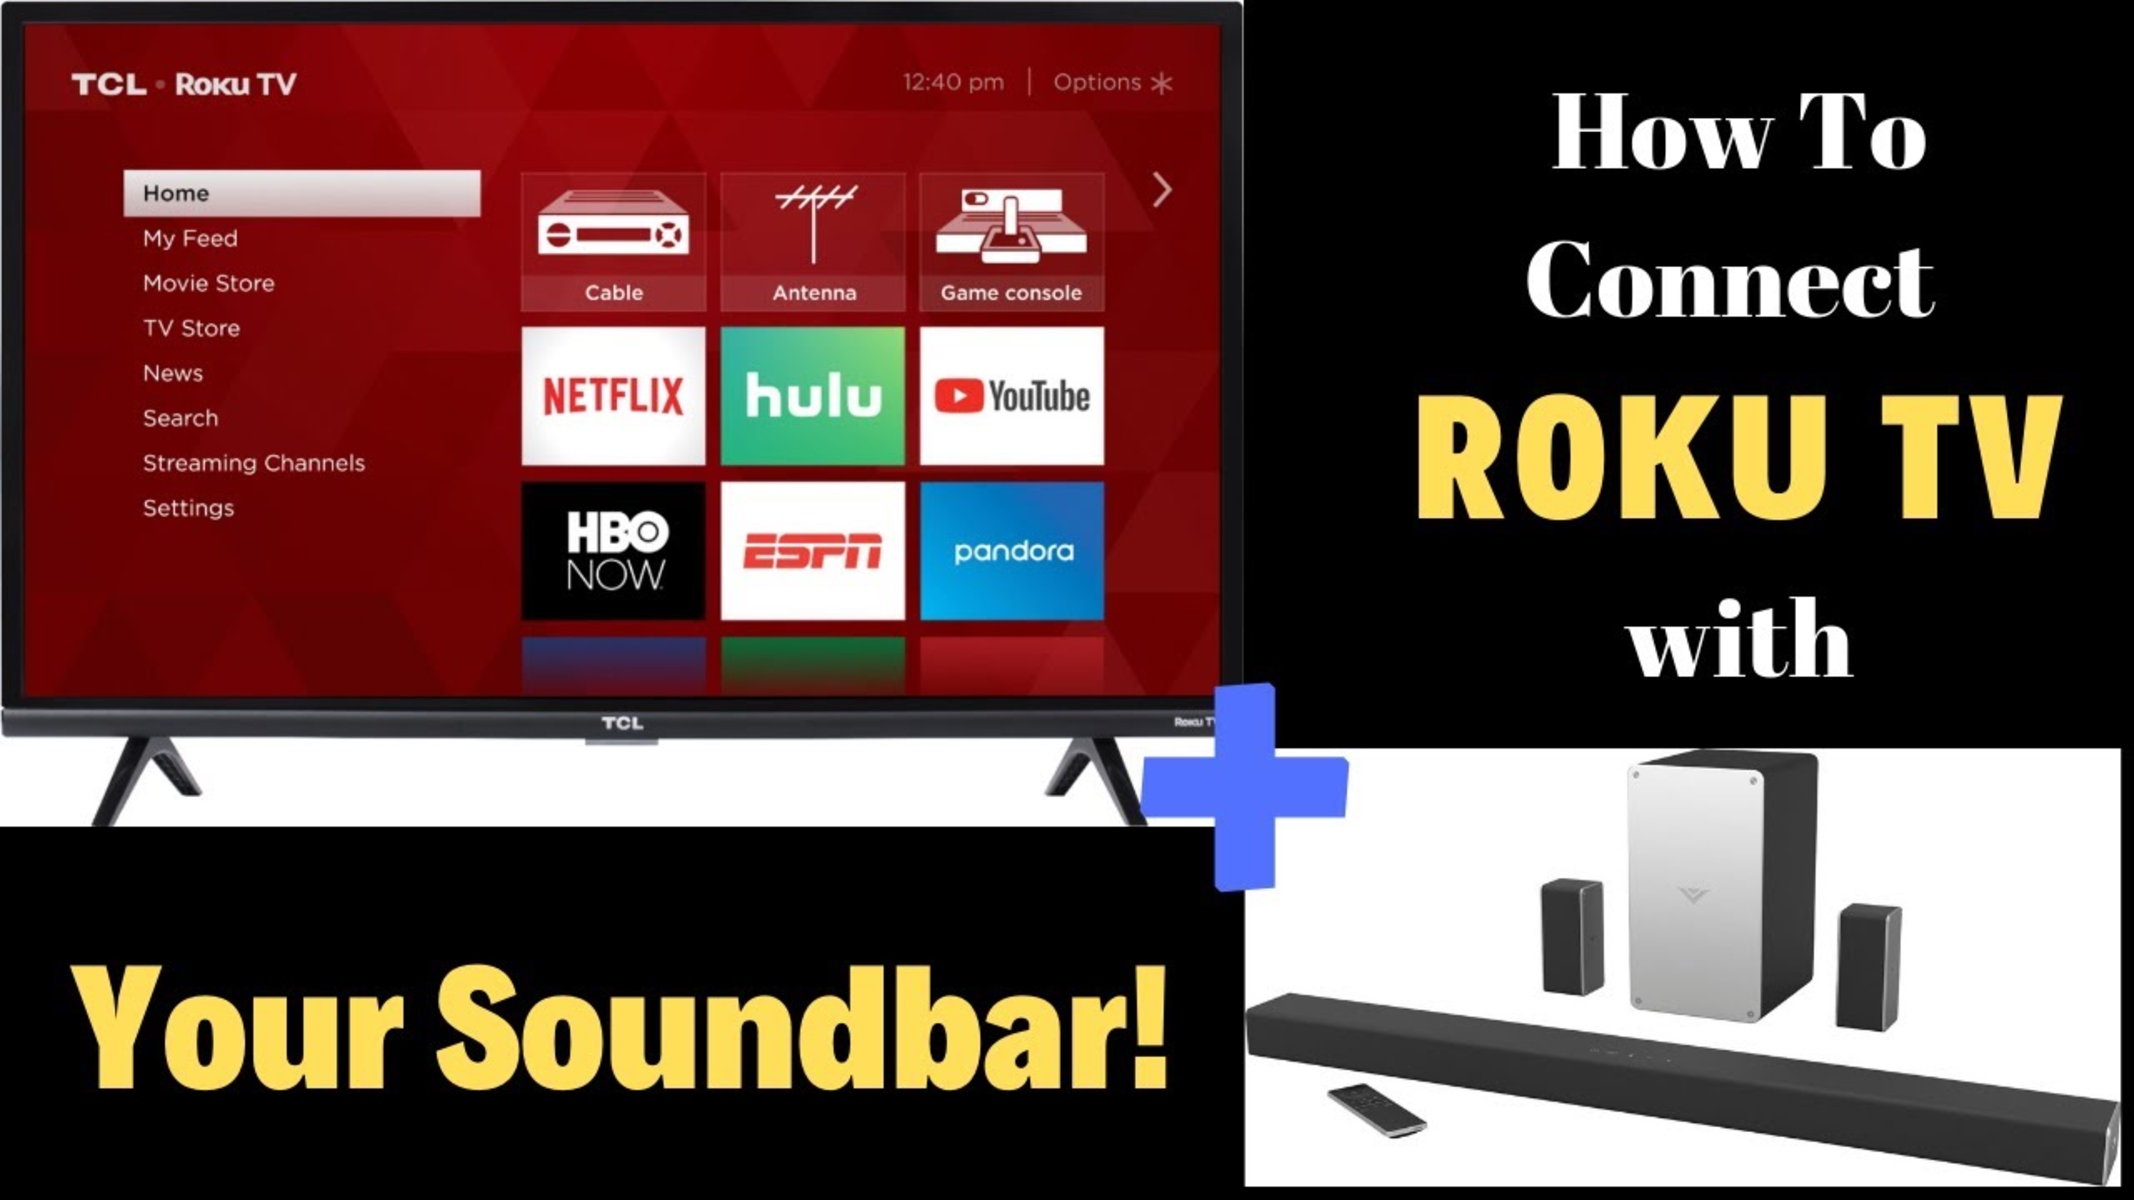 How To Connect Soundbar To Roku Tv With HDMI